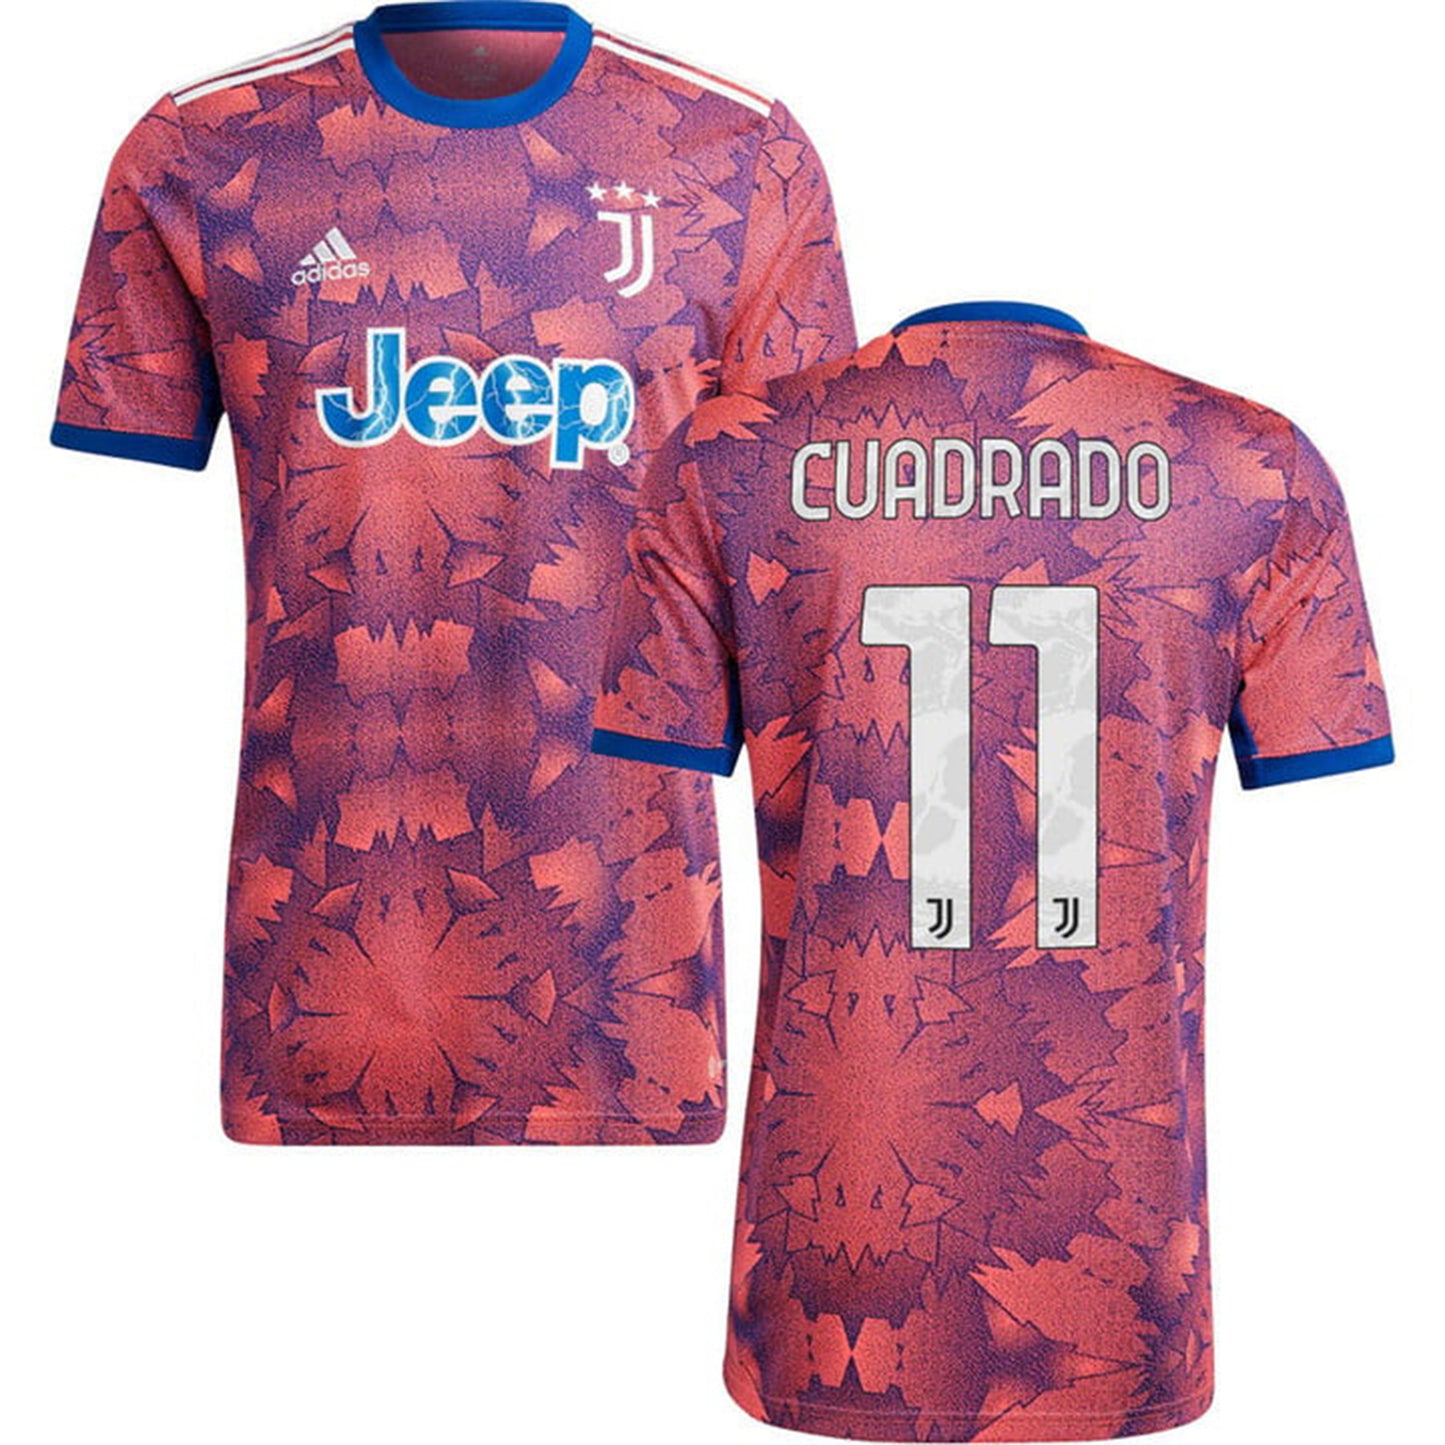 Juan Cuadrado Juventus 11 Jersey